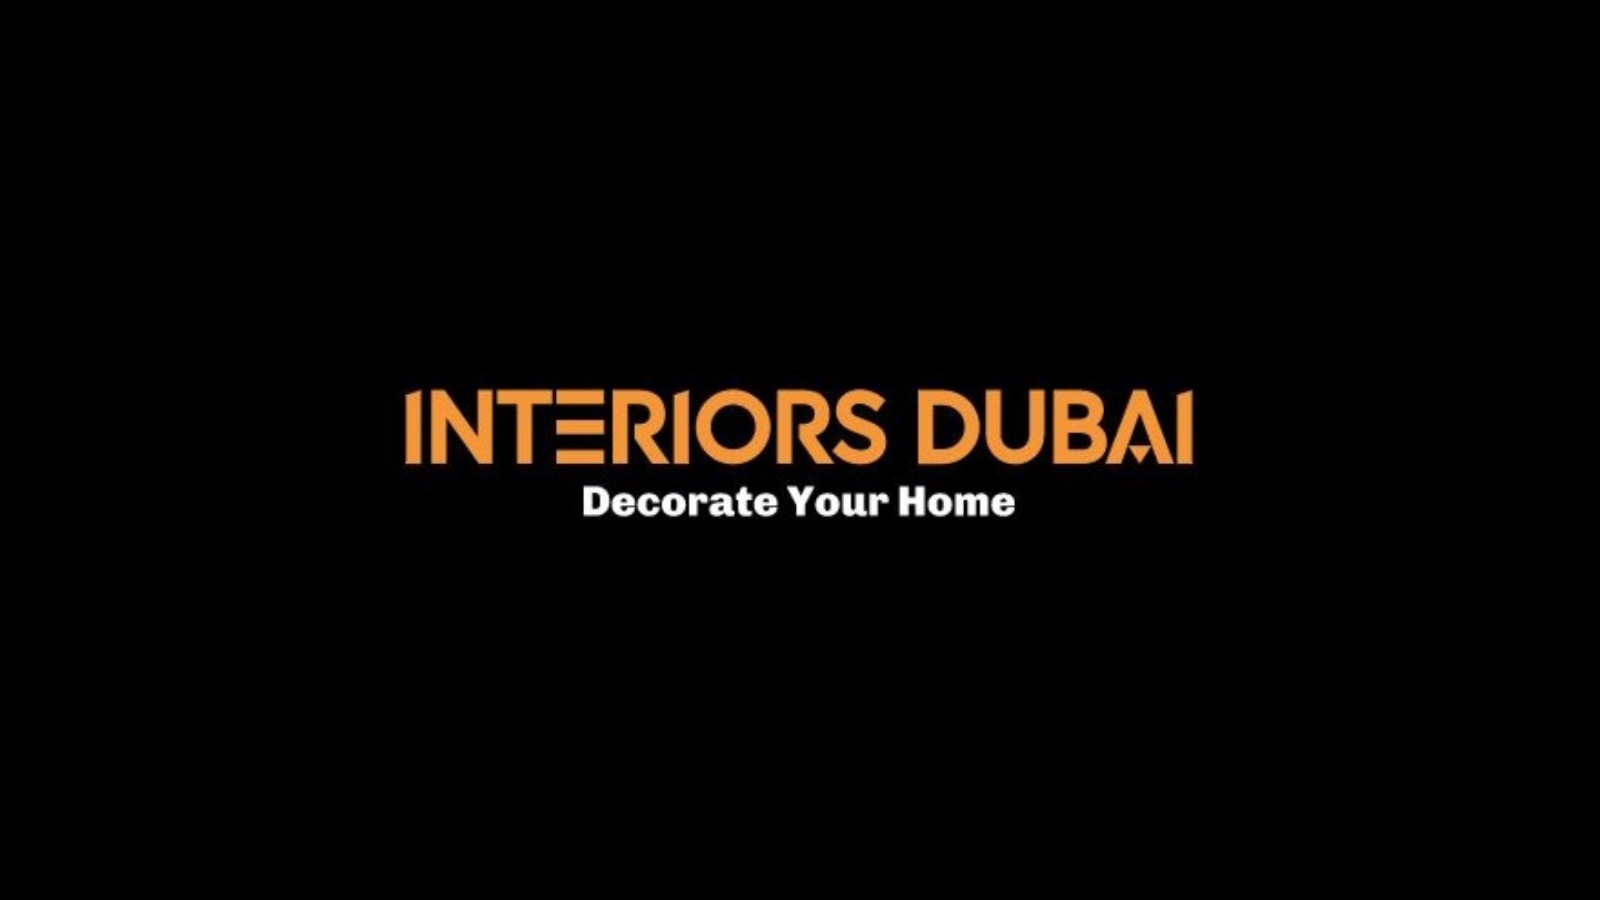 Interior Dubai